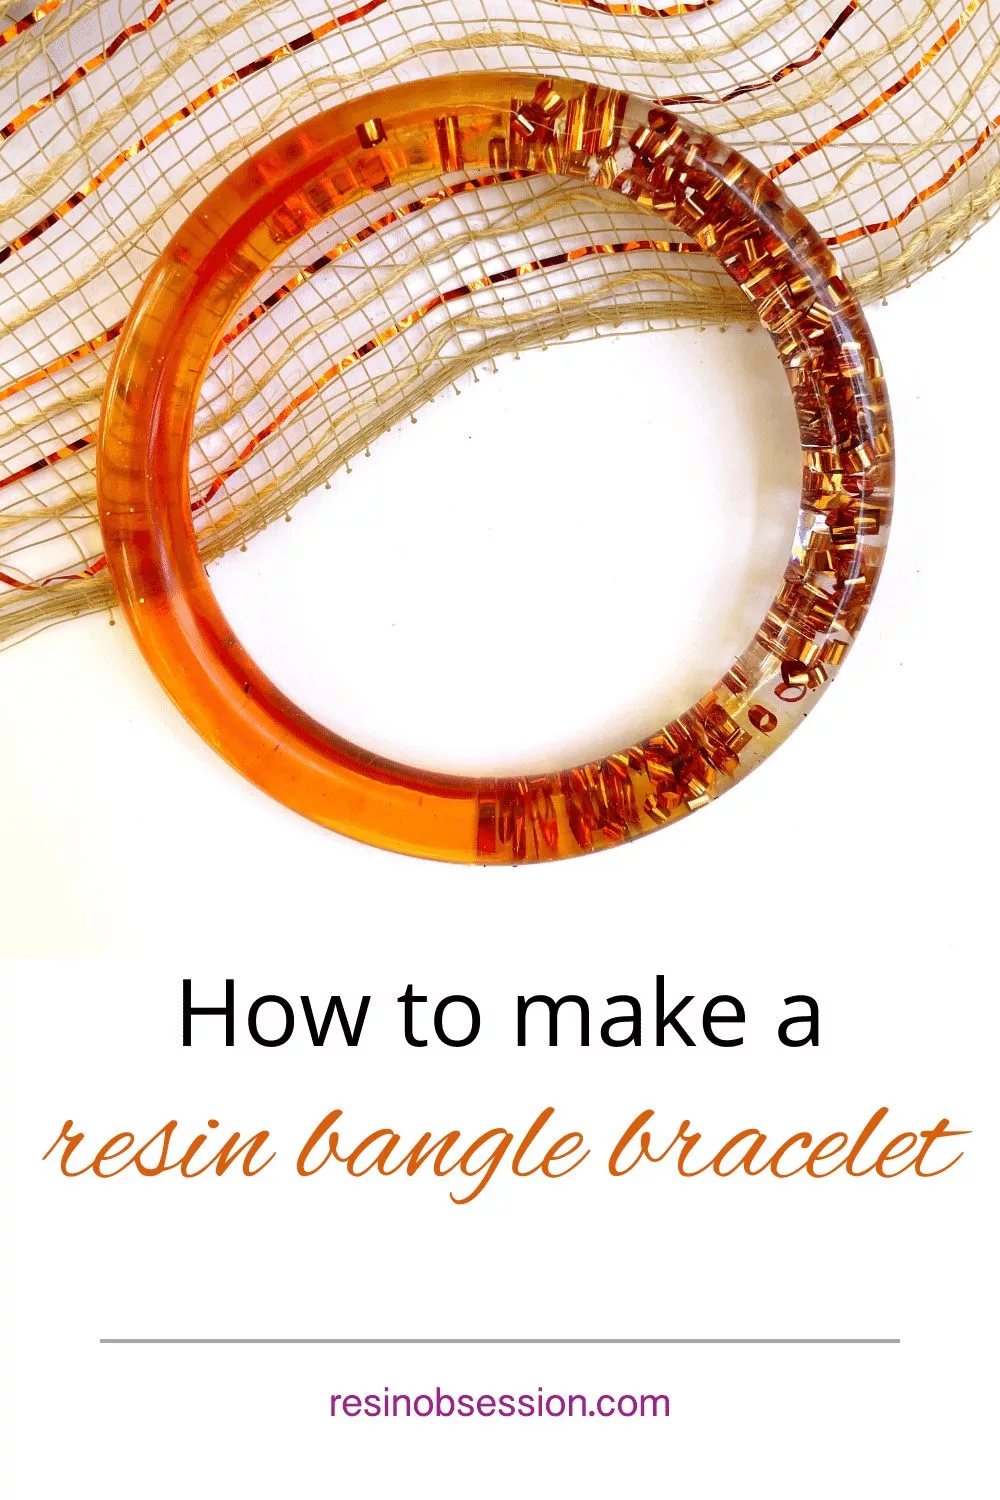 How to make a resin bangle bracelet